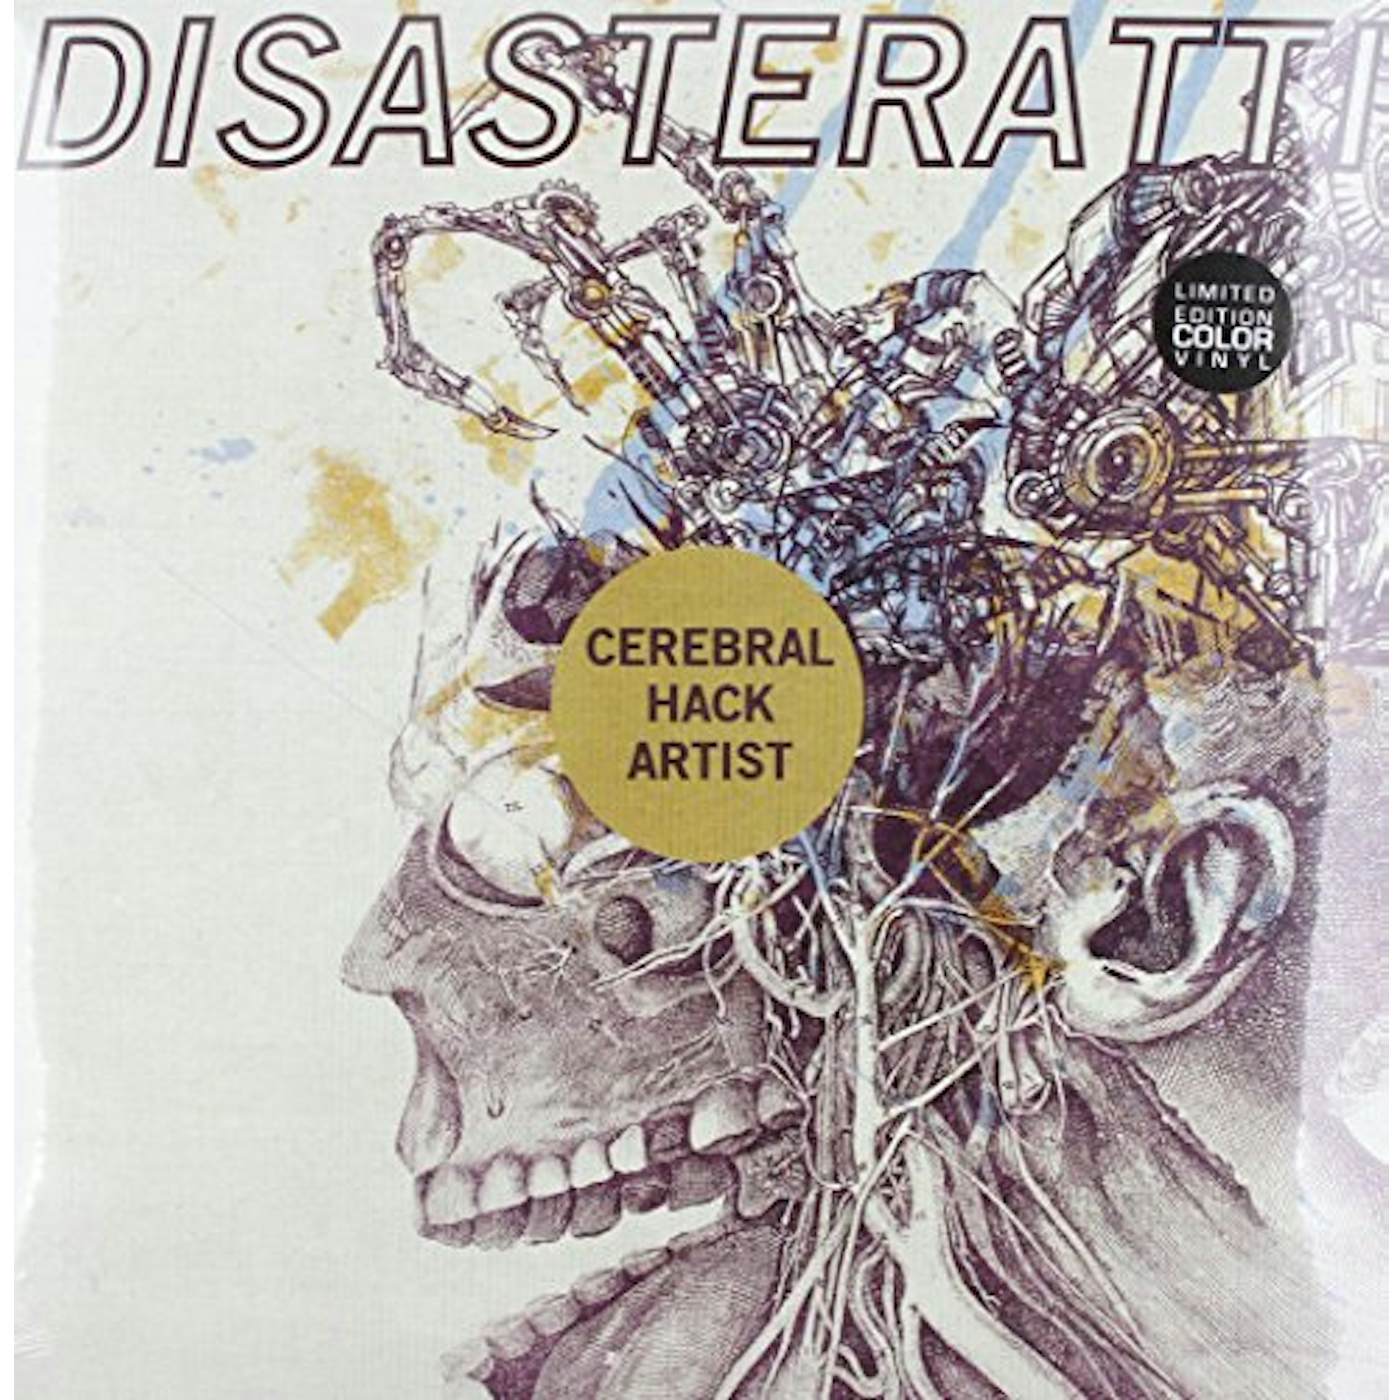 Disasteratti CEREBRAL HACK ARTIST Vinyl Record